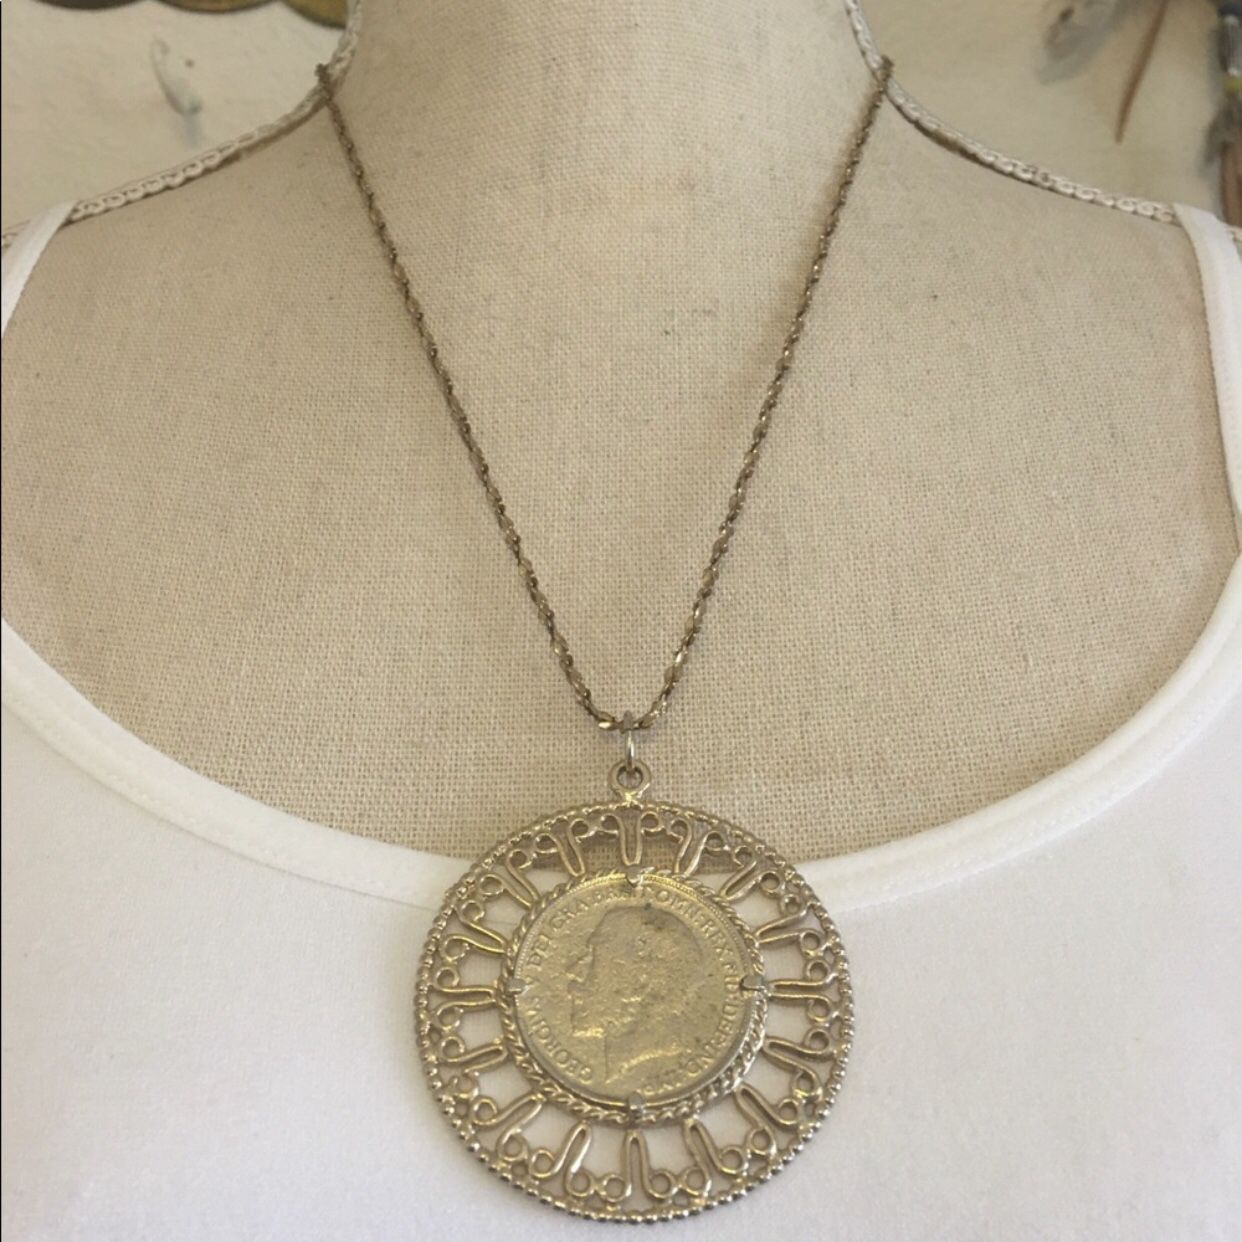 Vintage 70s 1916 GB King George V coin necklace